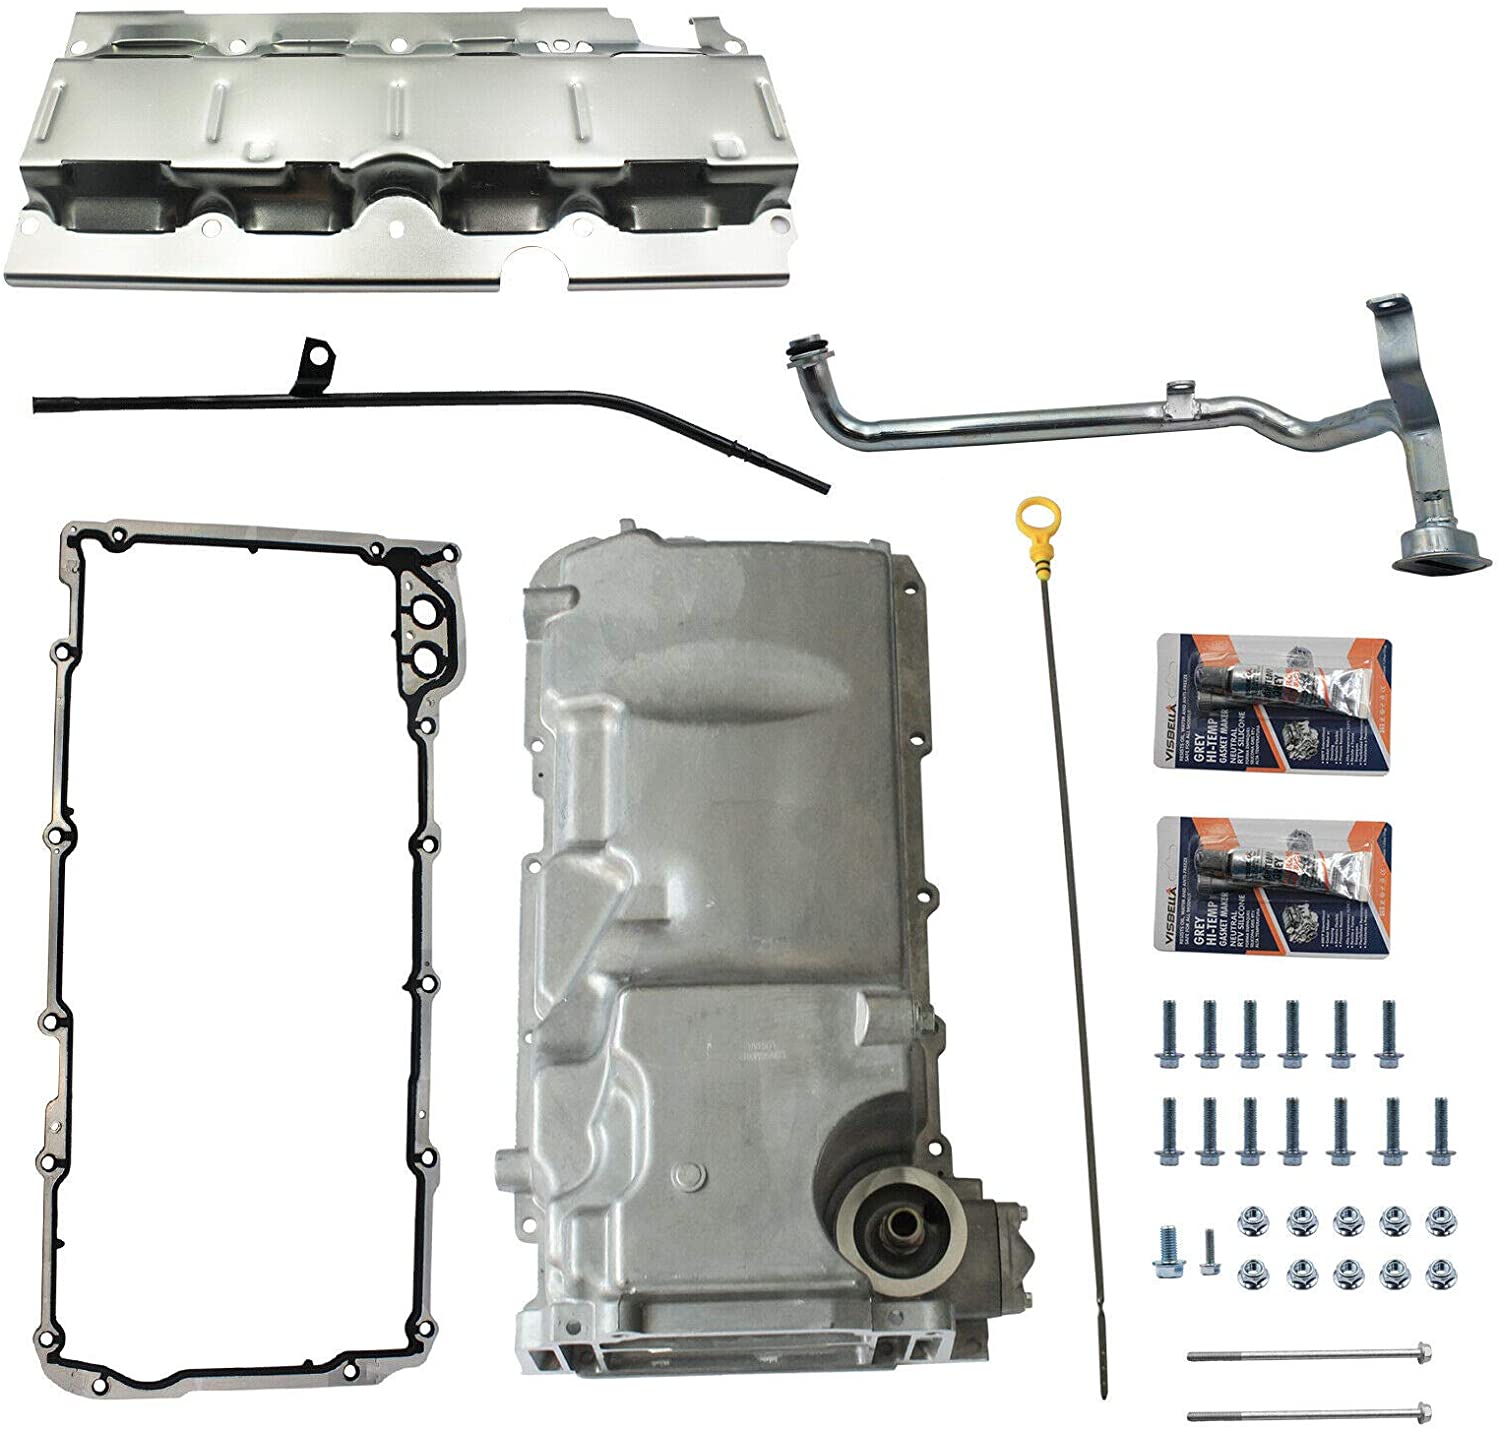 LOSTAR Muscle Car Engine Oil Pan Kit Fits LS1 / LS3 / LSA/LSX Engines 19212593